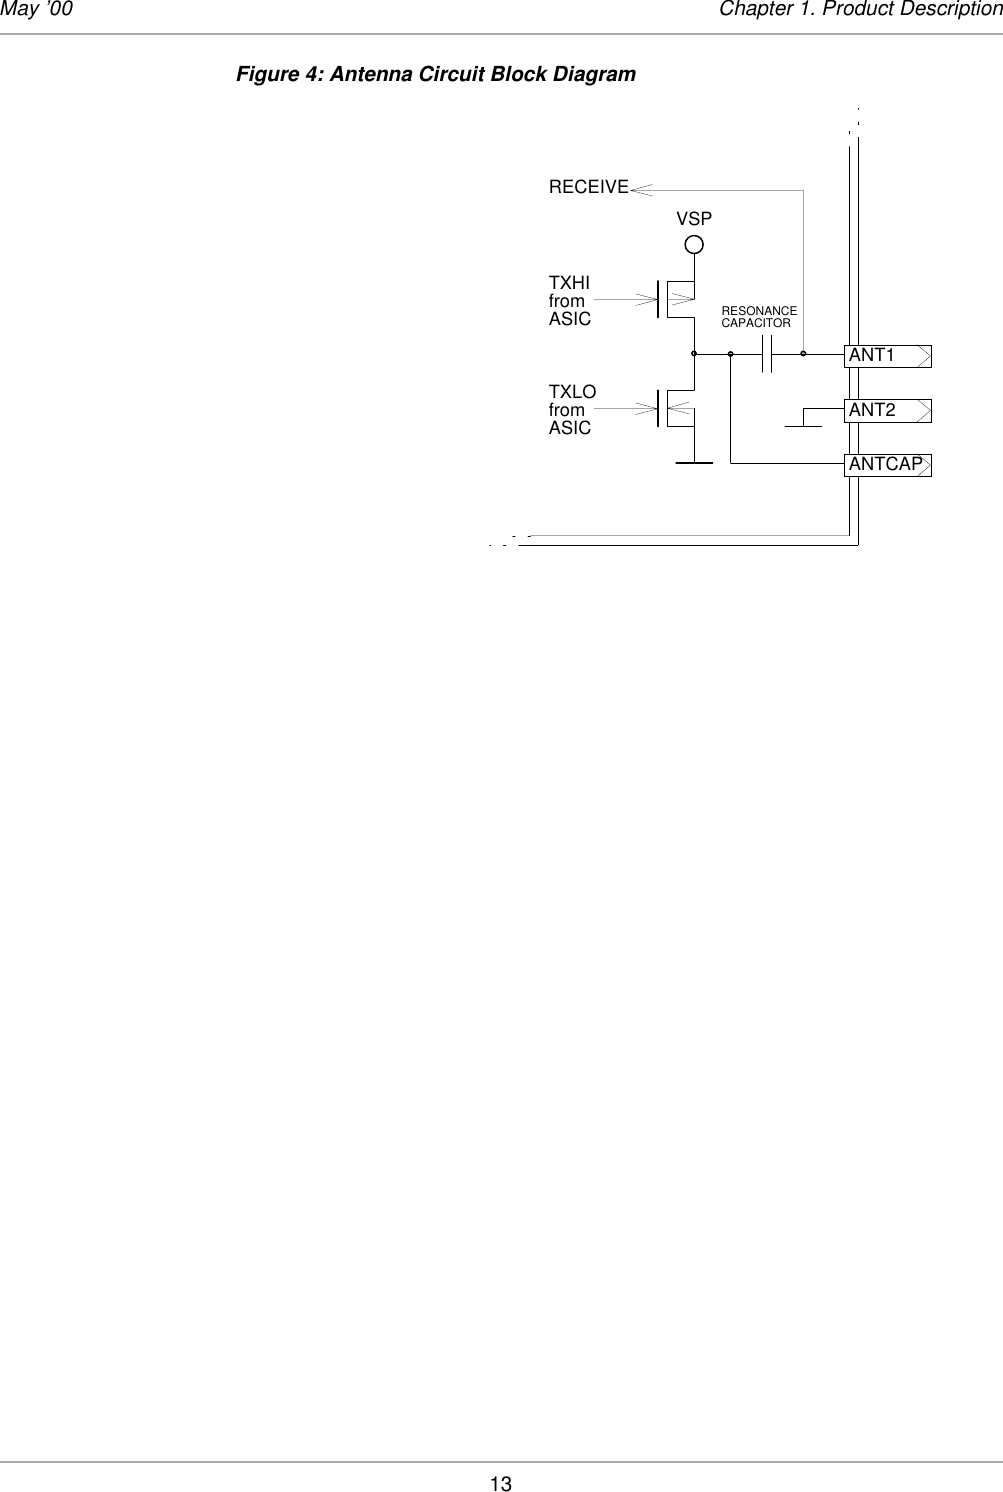 13May ’00 Chapter 1. Product DescriptionFigure 4: Antenna Circuit Block Diagram ANT1ANT2ANTCAPTXHIfromASICTXLOfromASICVSPRECEIVERESONANCECAPACITOR